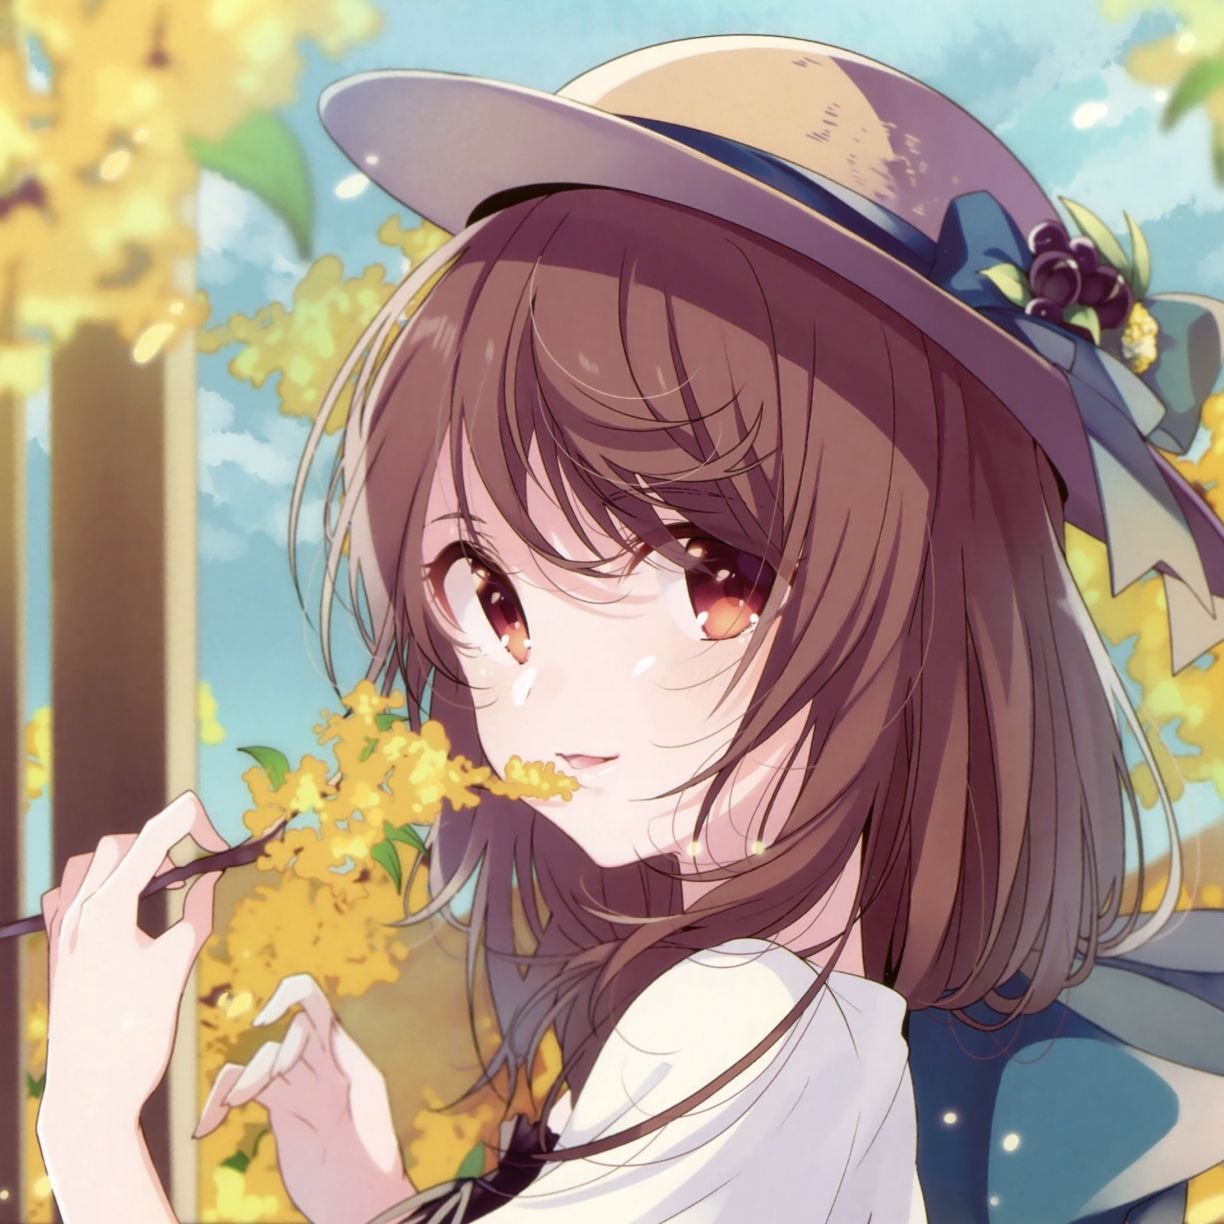 Wallpaper autumn, tree branch, anime girl, cute desktop wallpaper, HD image, picture, background, 9dcfb2